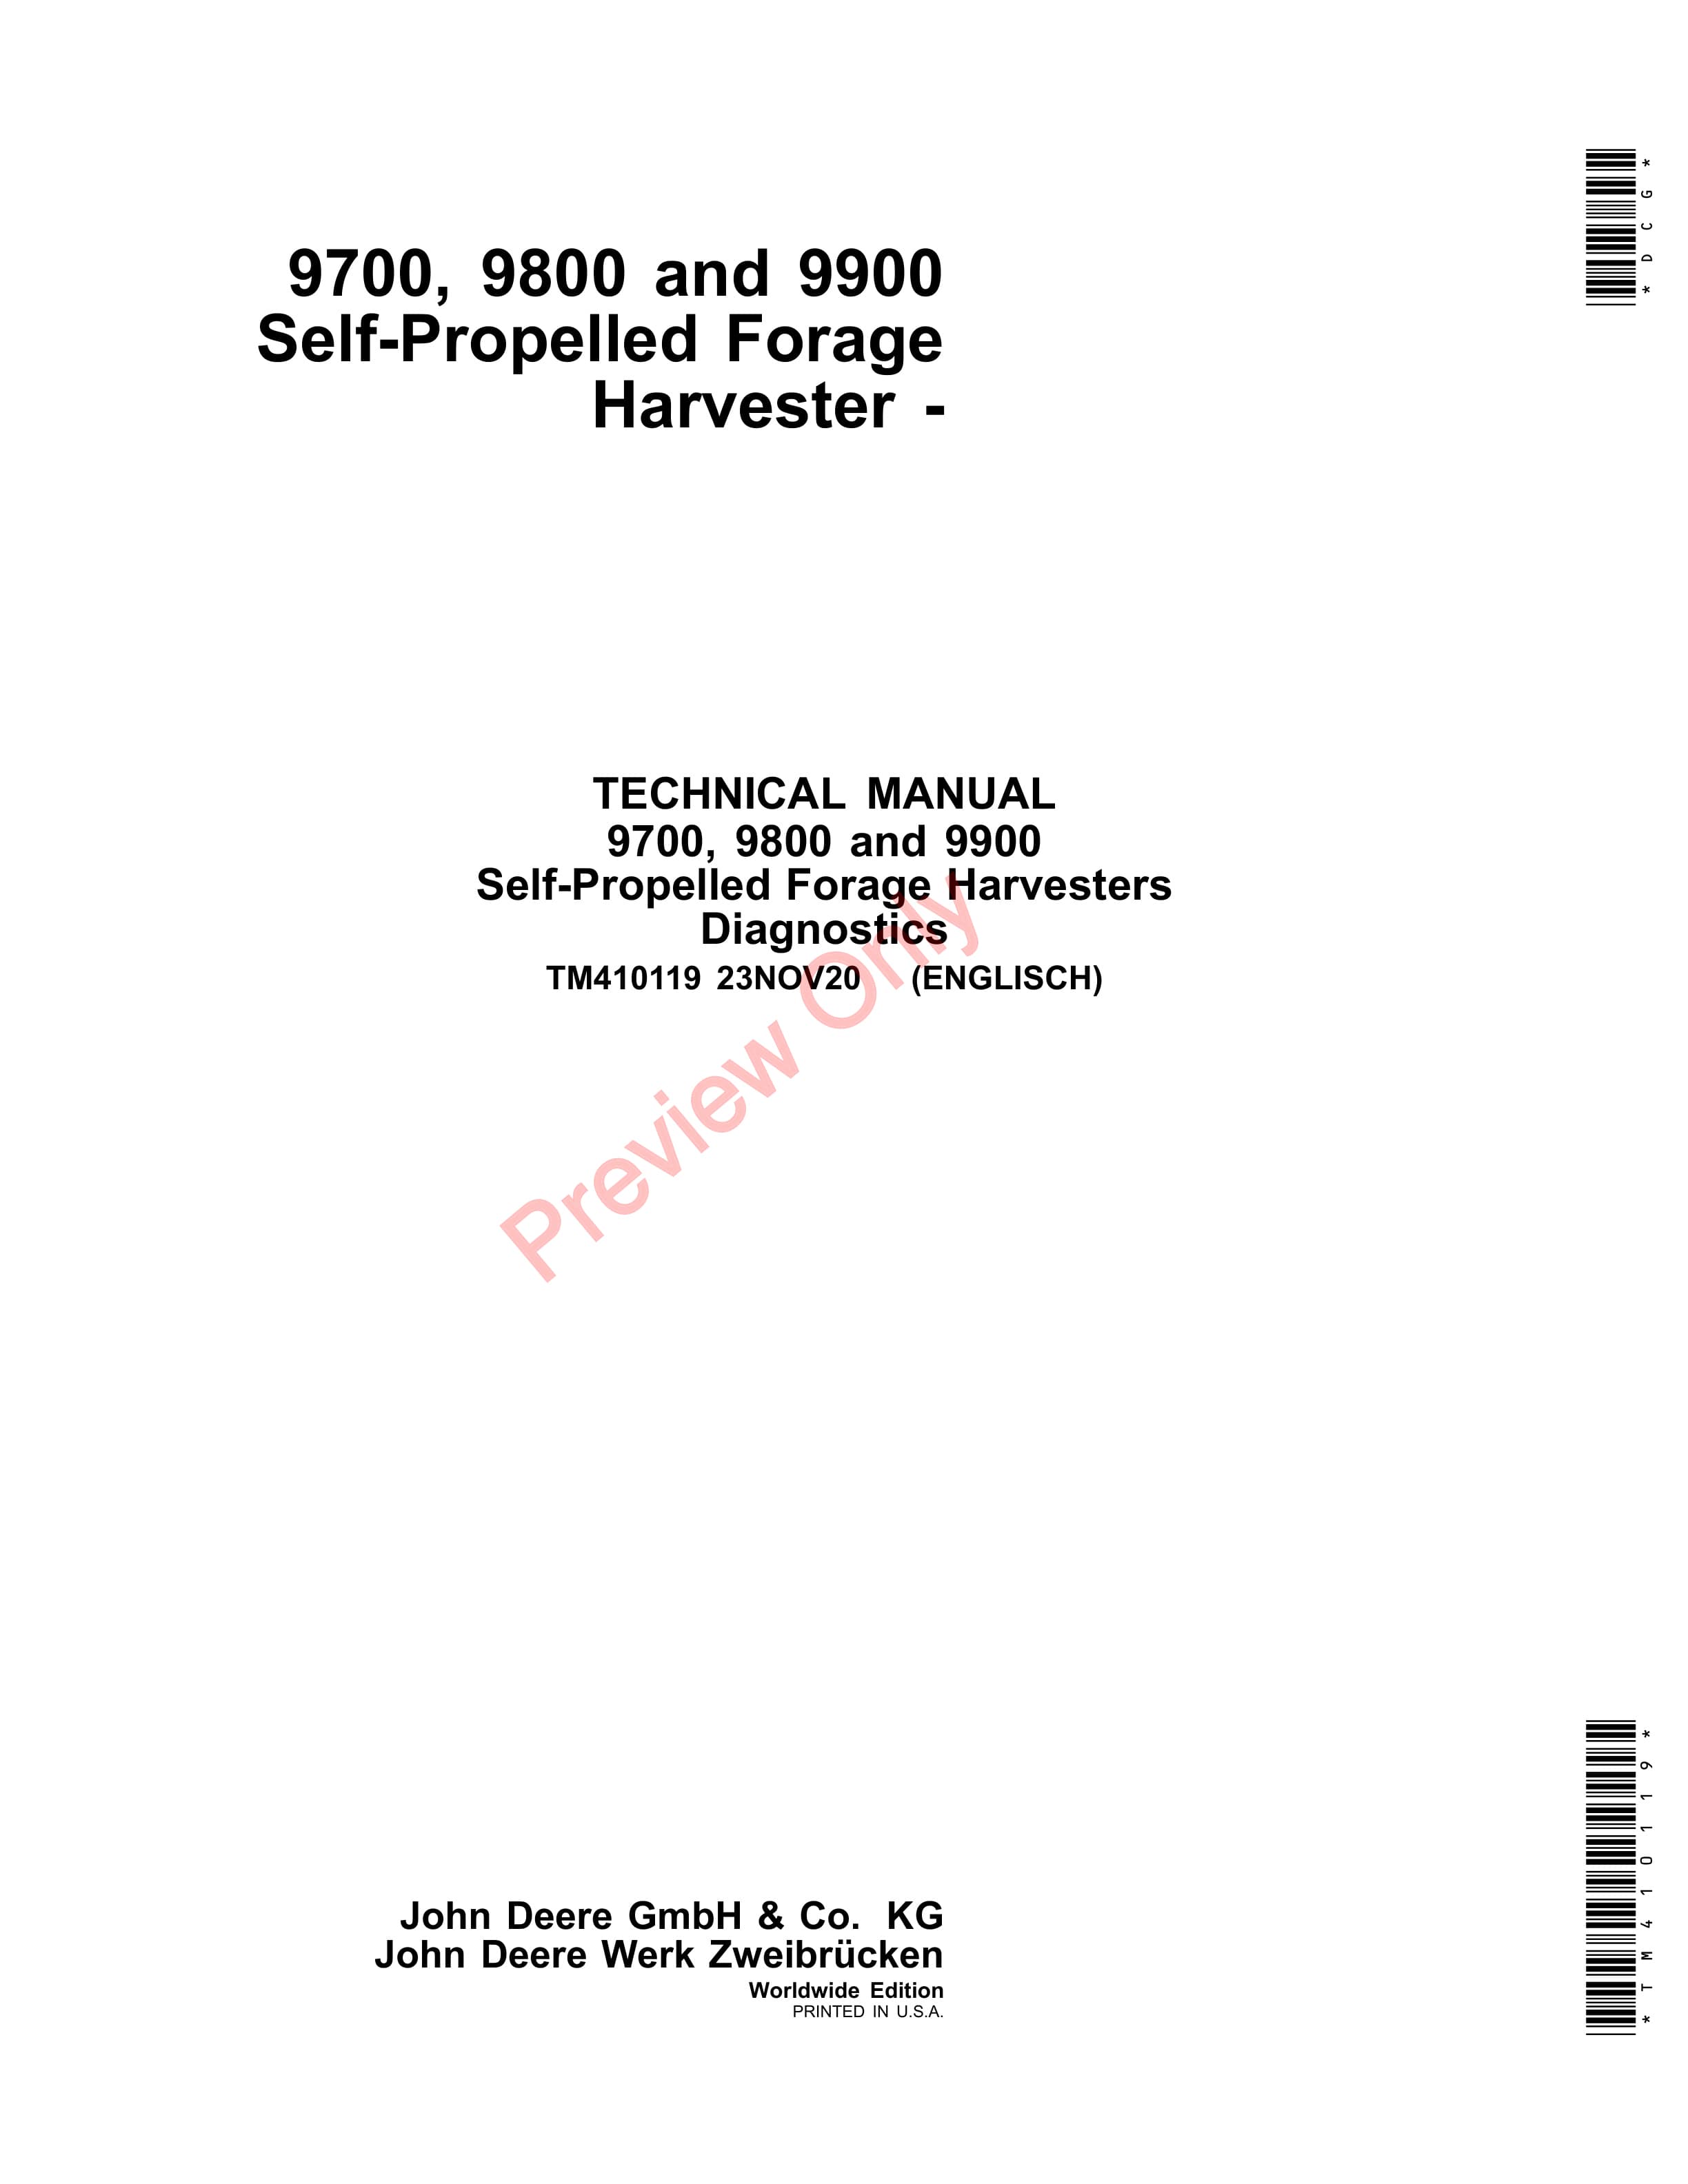 John Deere 9700 9800 and 9900 Self Propelled Forage Harvester Technical Manual TM410119 23NOV20 1